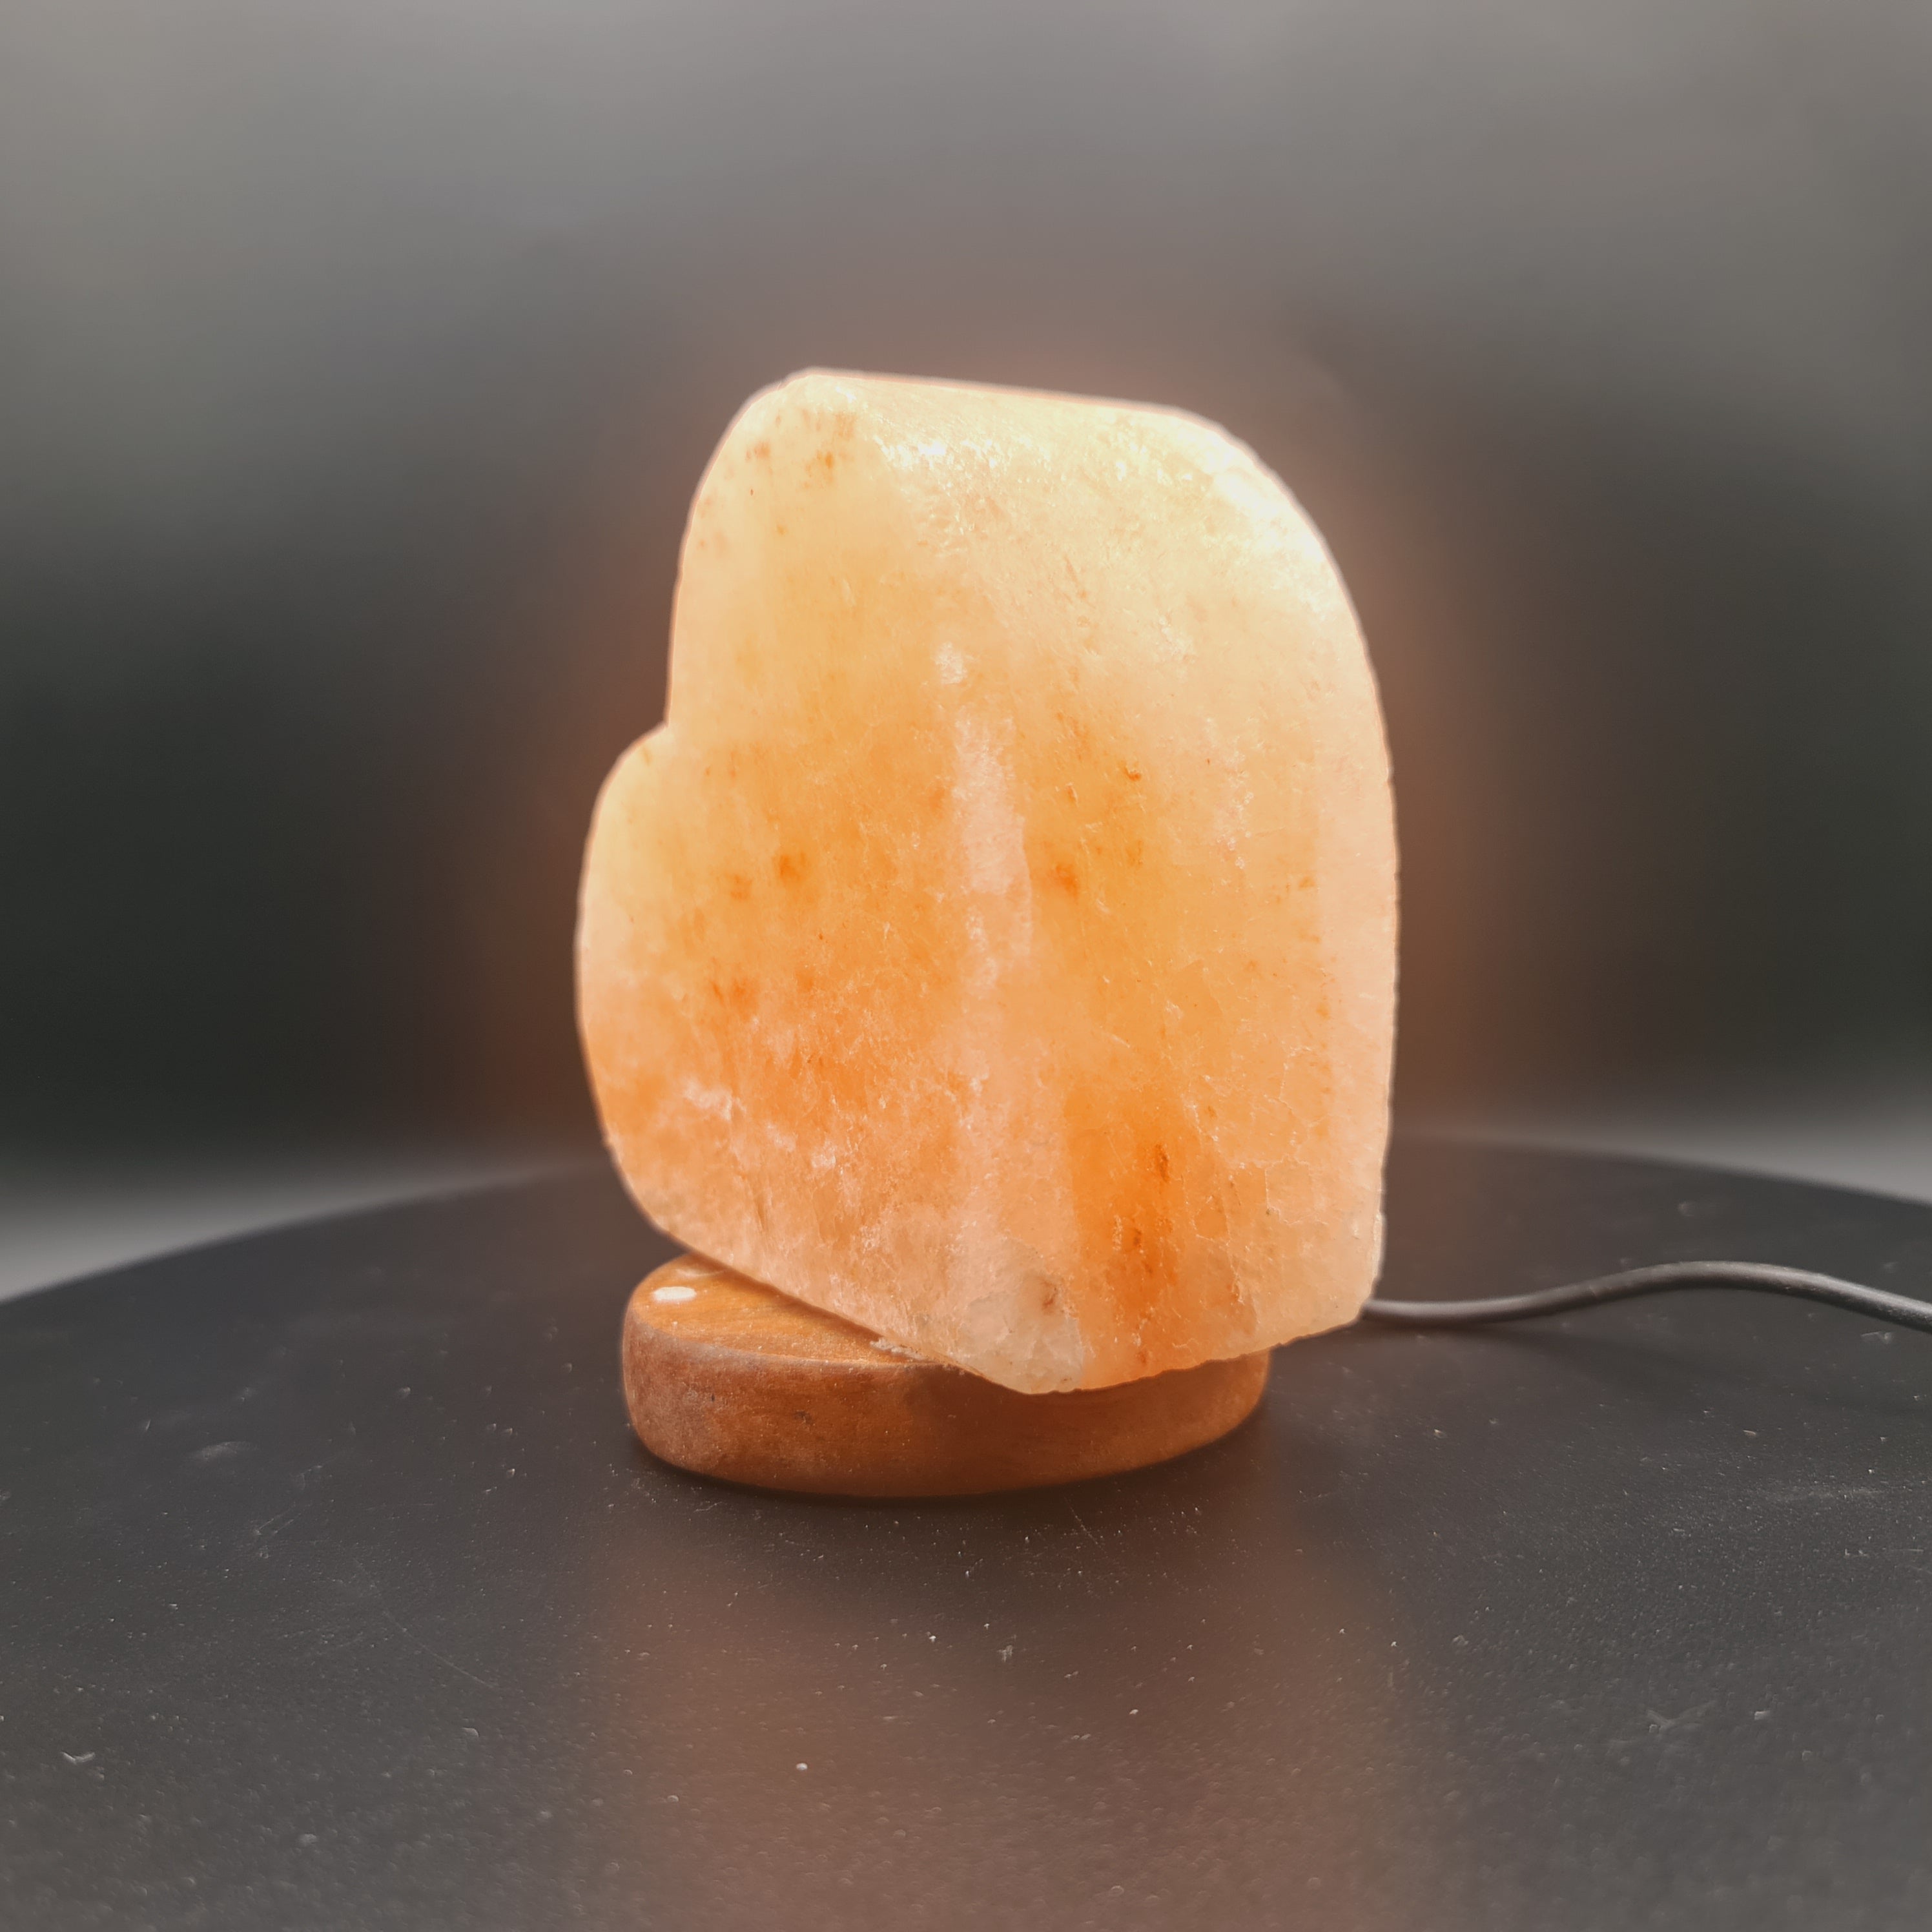 HOMY LED USB Himalayan Heart-Shaped Salt Lamp, Multi Color